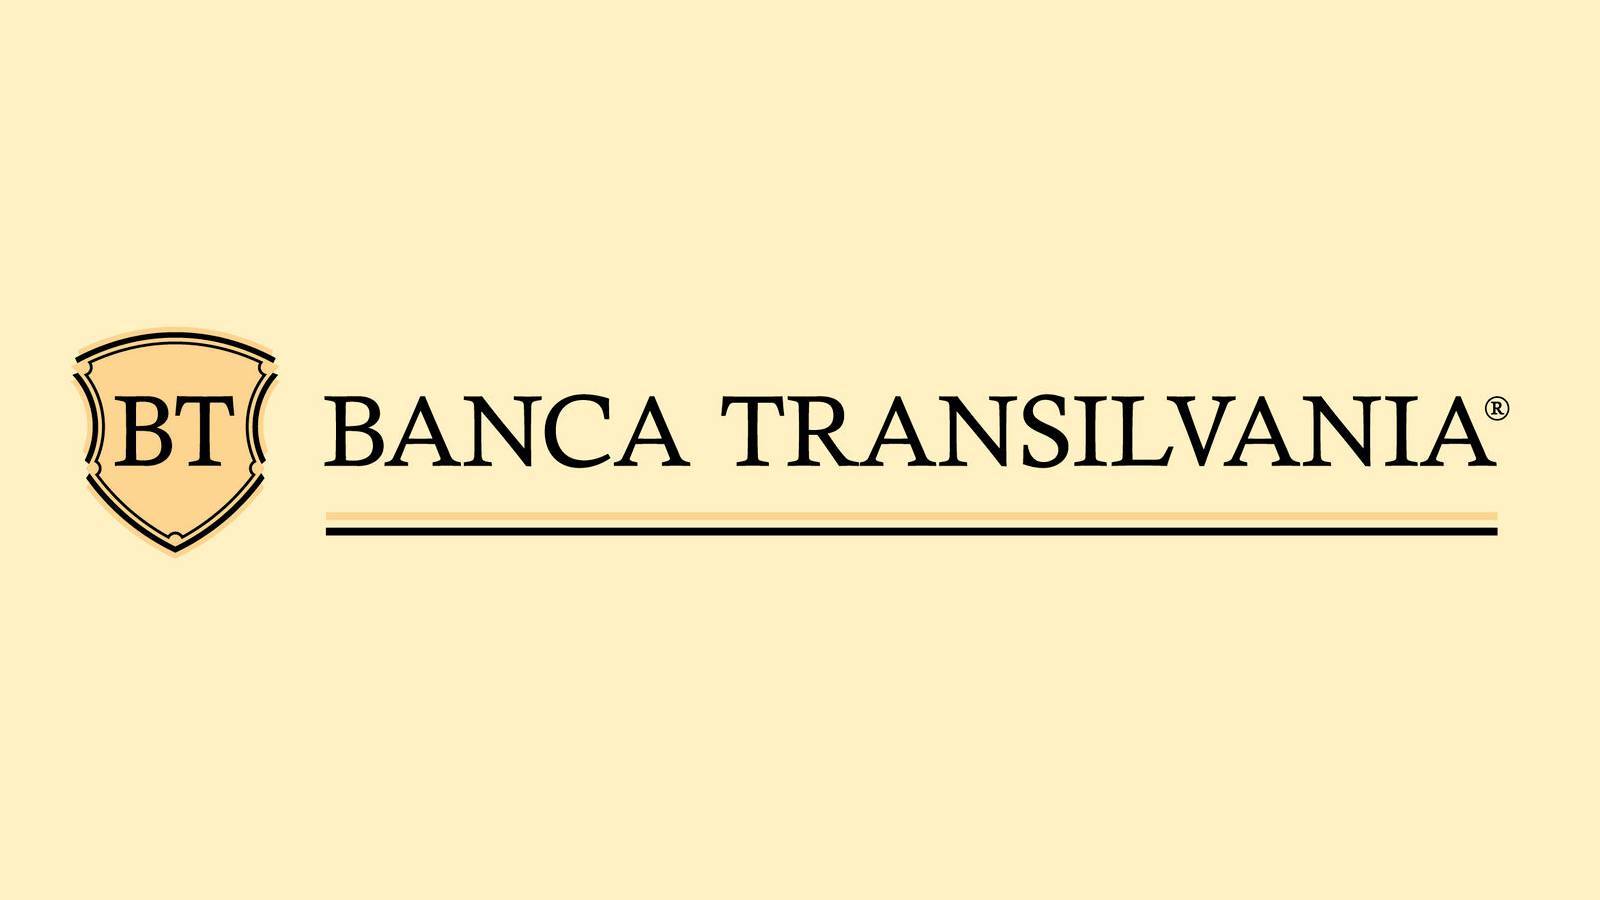 BANCA Transilvania Anunturile IMPORTANTA Ridicata Vizeaza Toti Clientii Romania